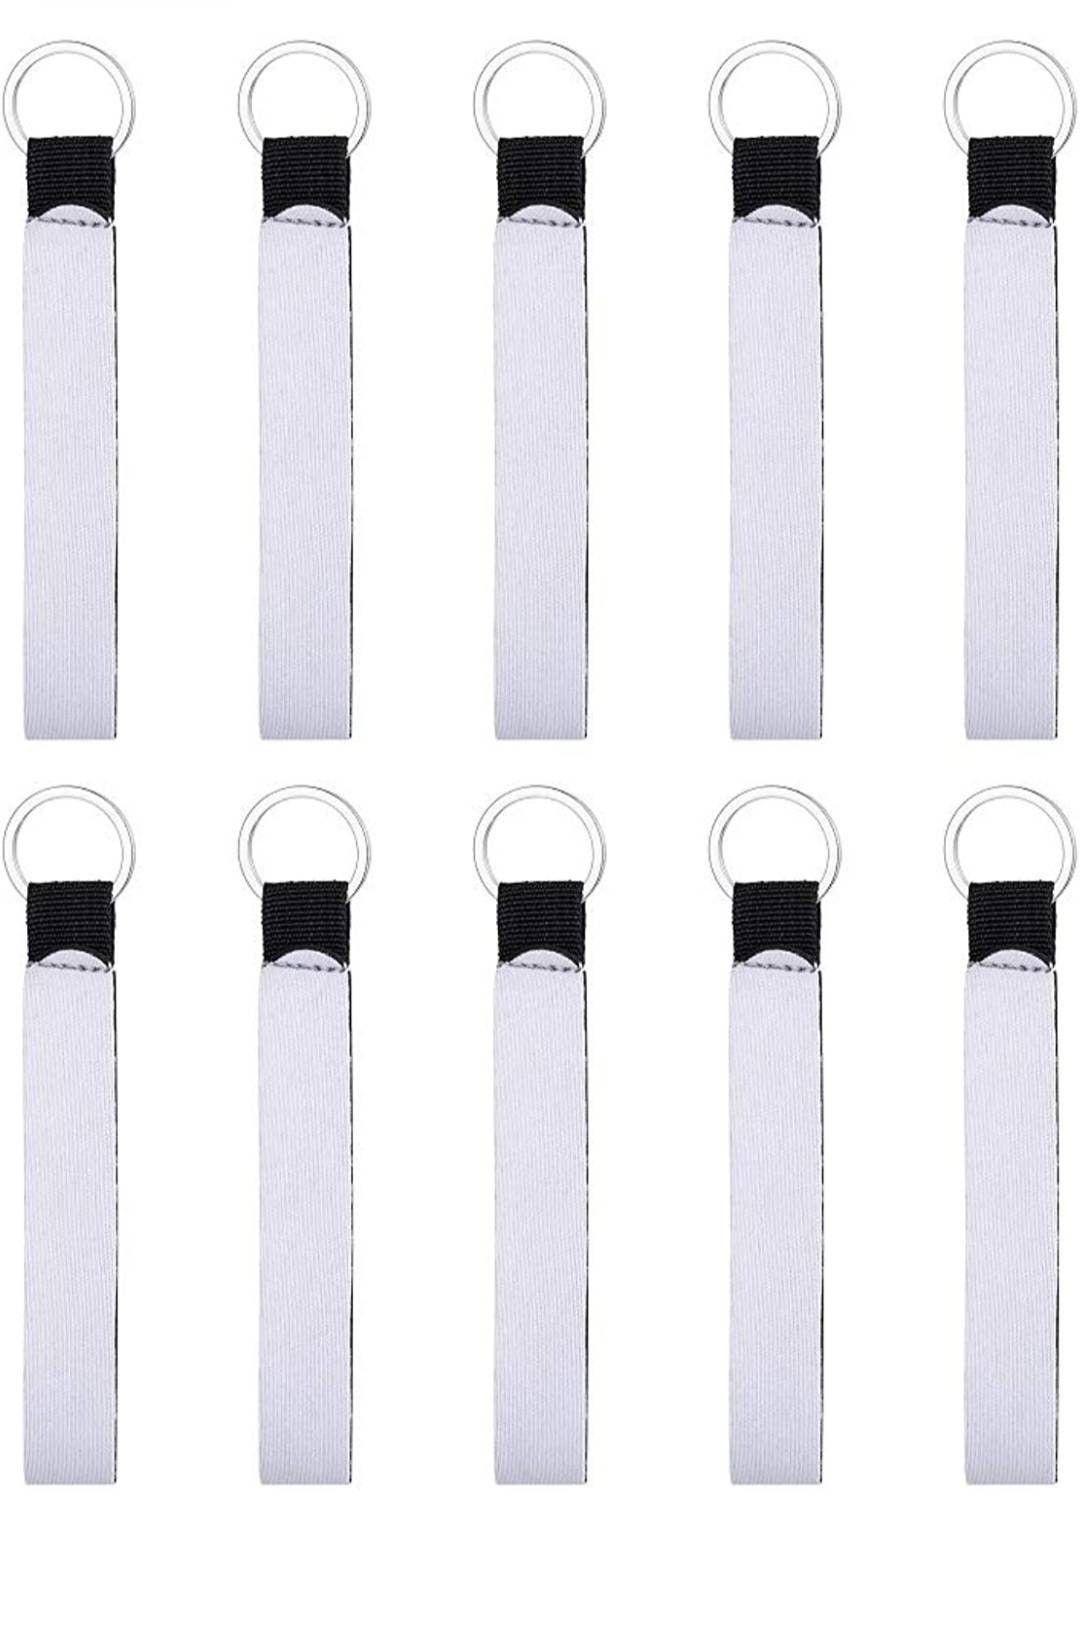 Blank Keychain Supplies Cotton Canvas Wristlet Keychain Key Fob